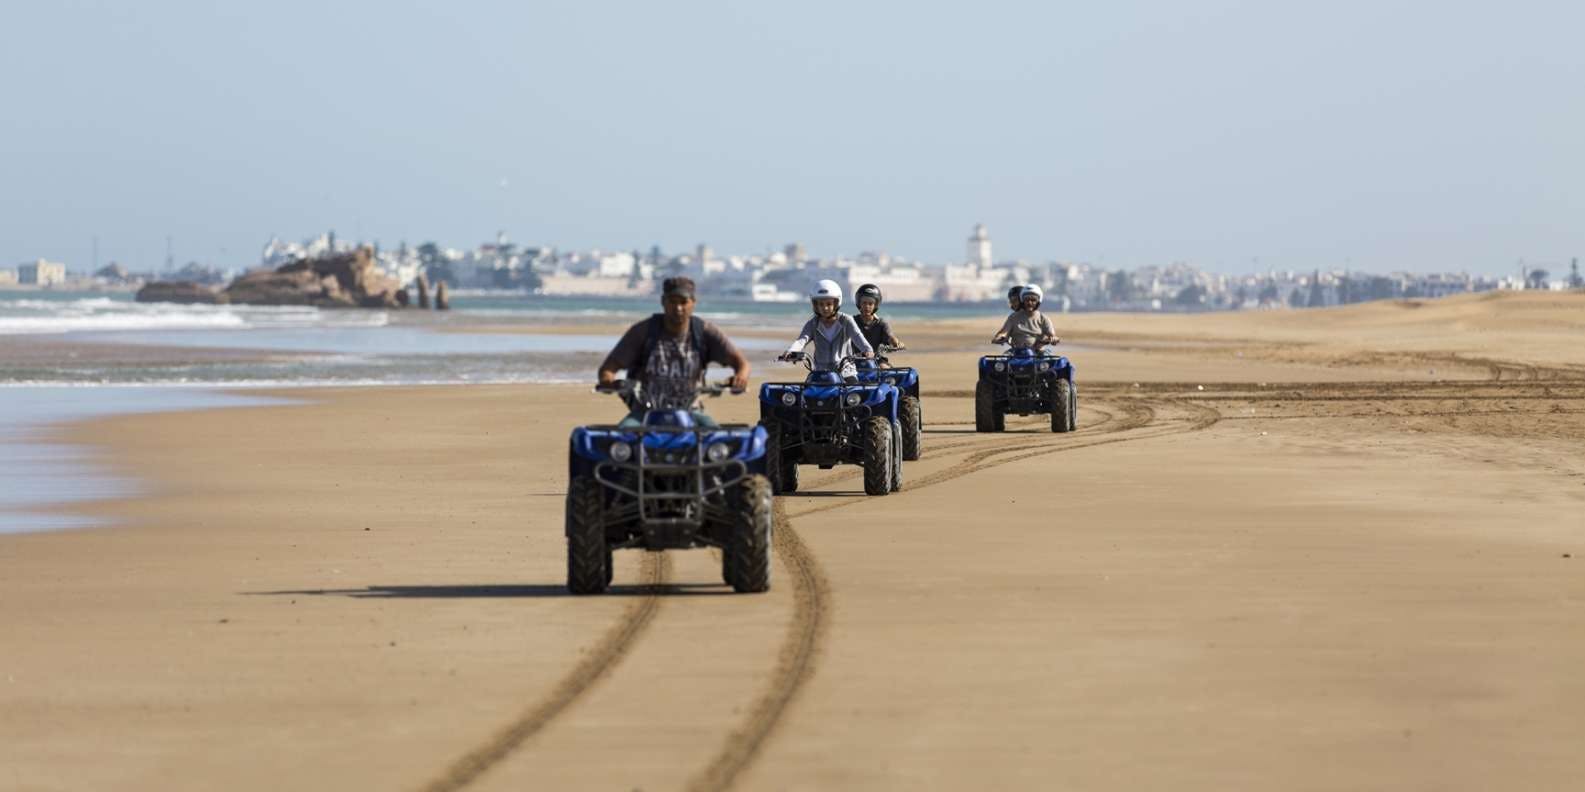 Tour en quad en la playa de Essaouira